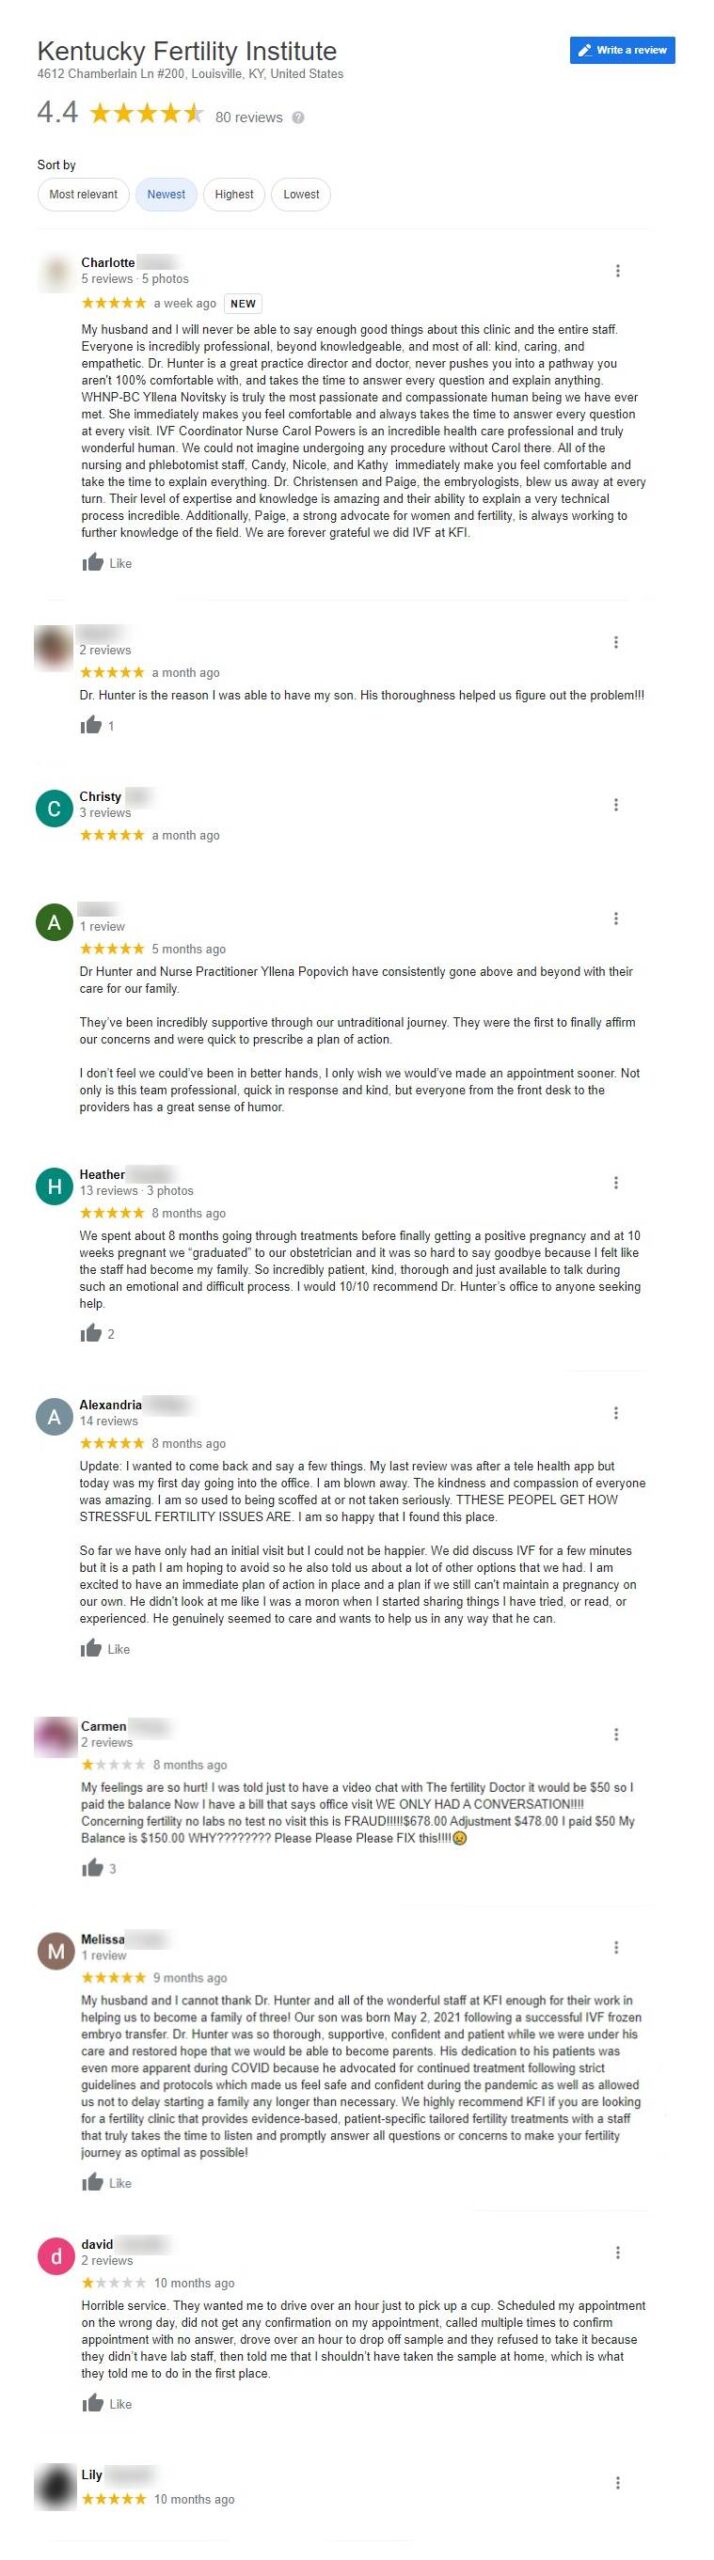 Reviews on kfi